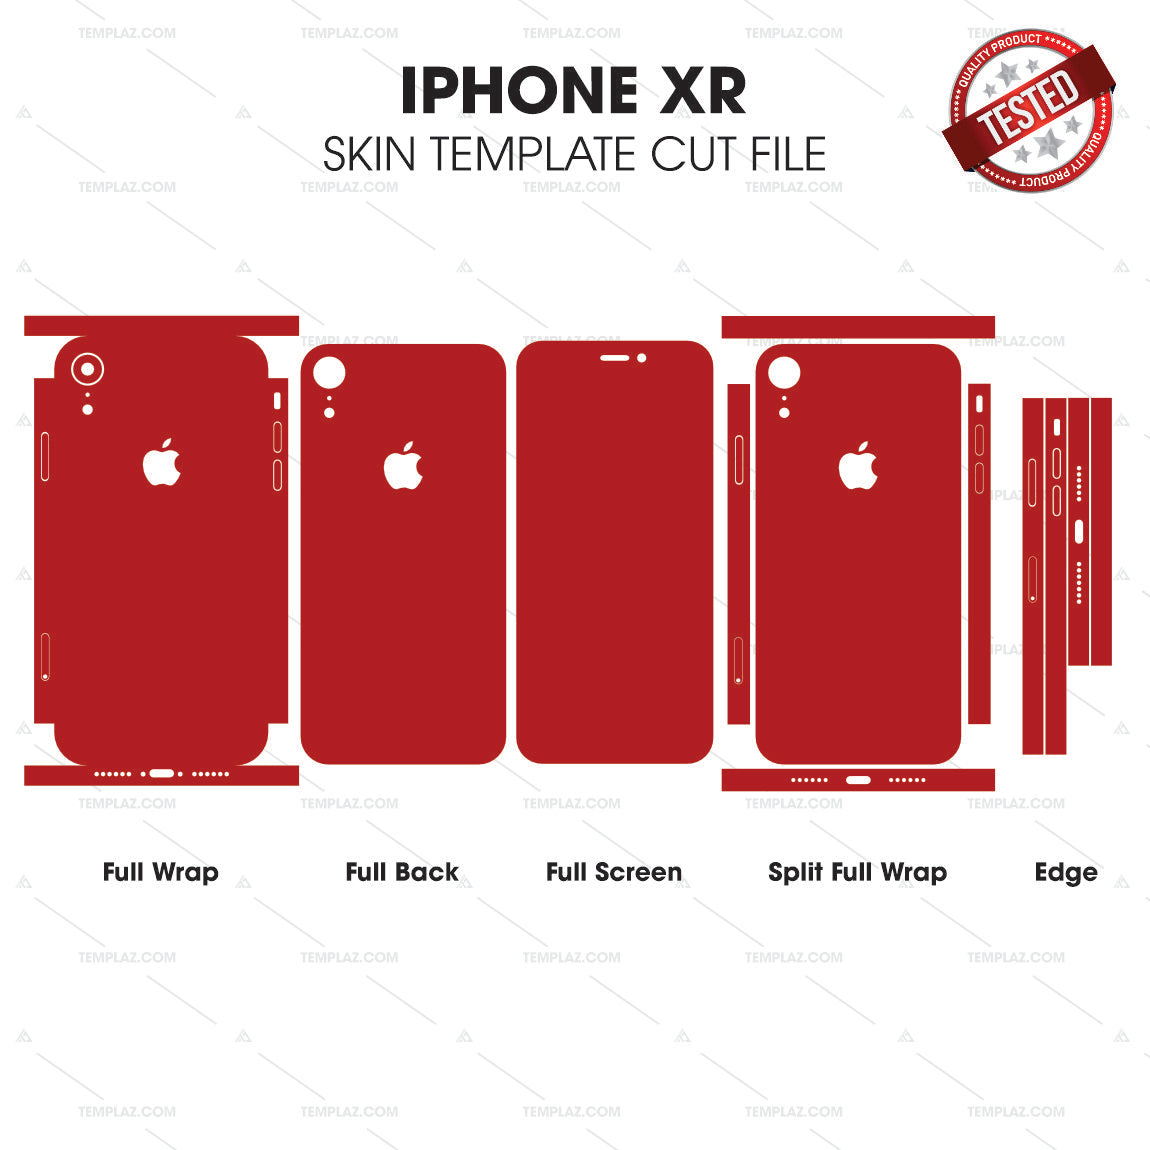 IPhone XR Skin Template Vector Cut File Bundle